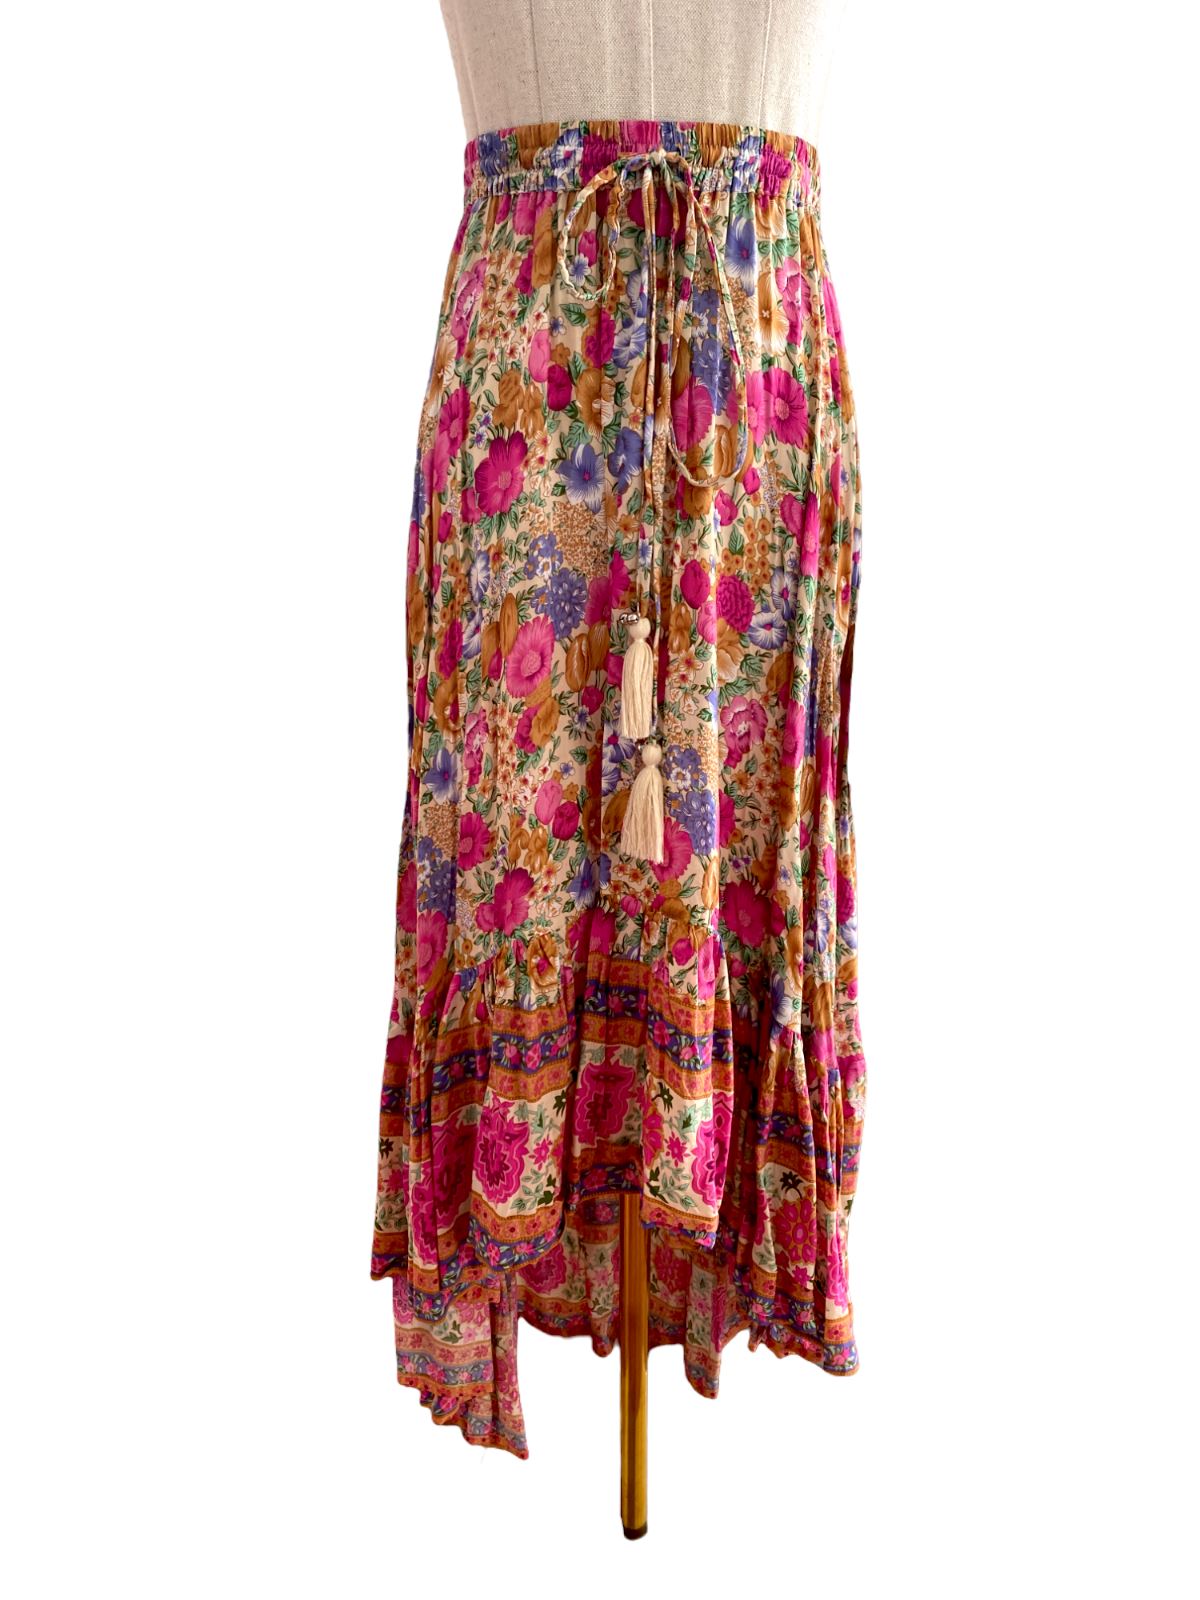 Wilde Bella Boho Floral Skirt | Sz S/M, High/Low, Tassels, Byron Bay Brand